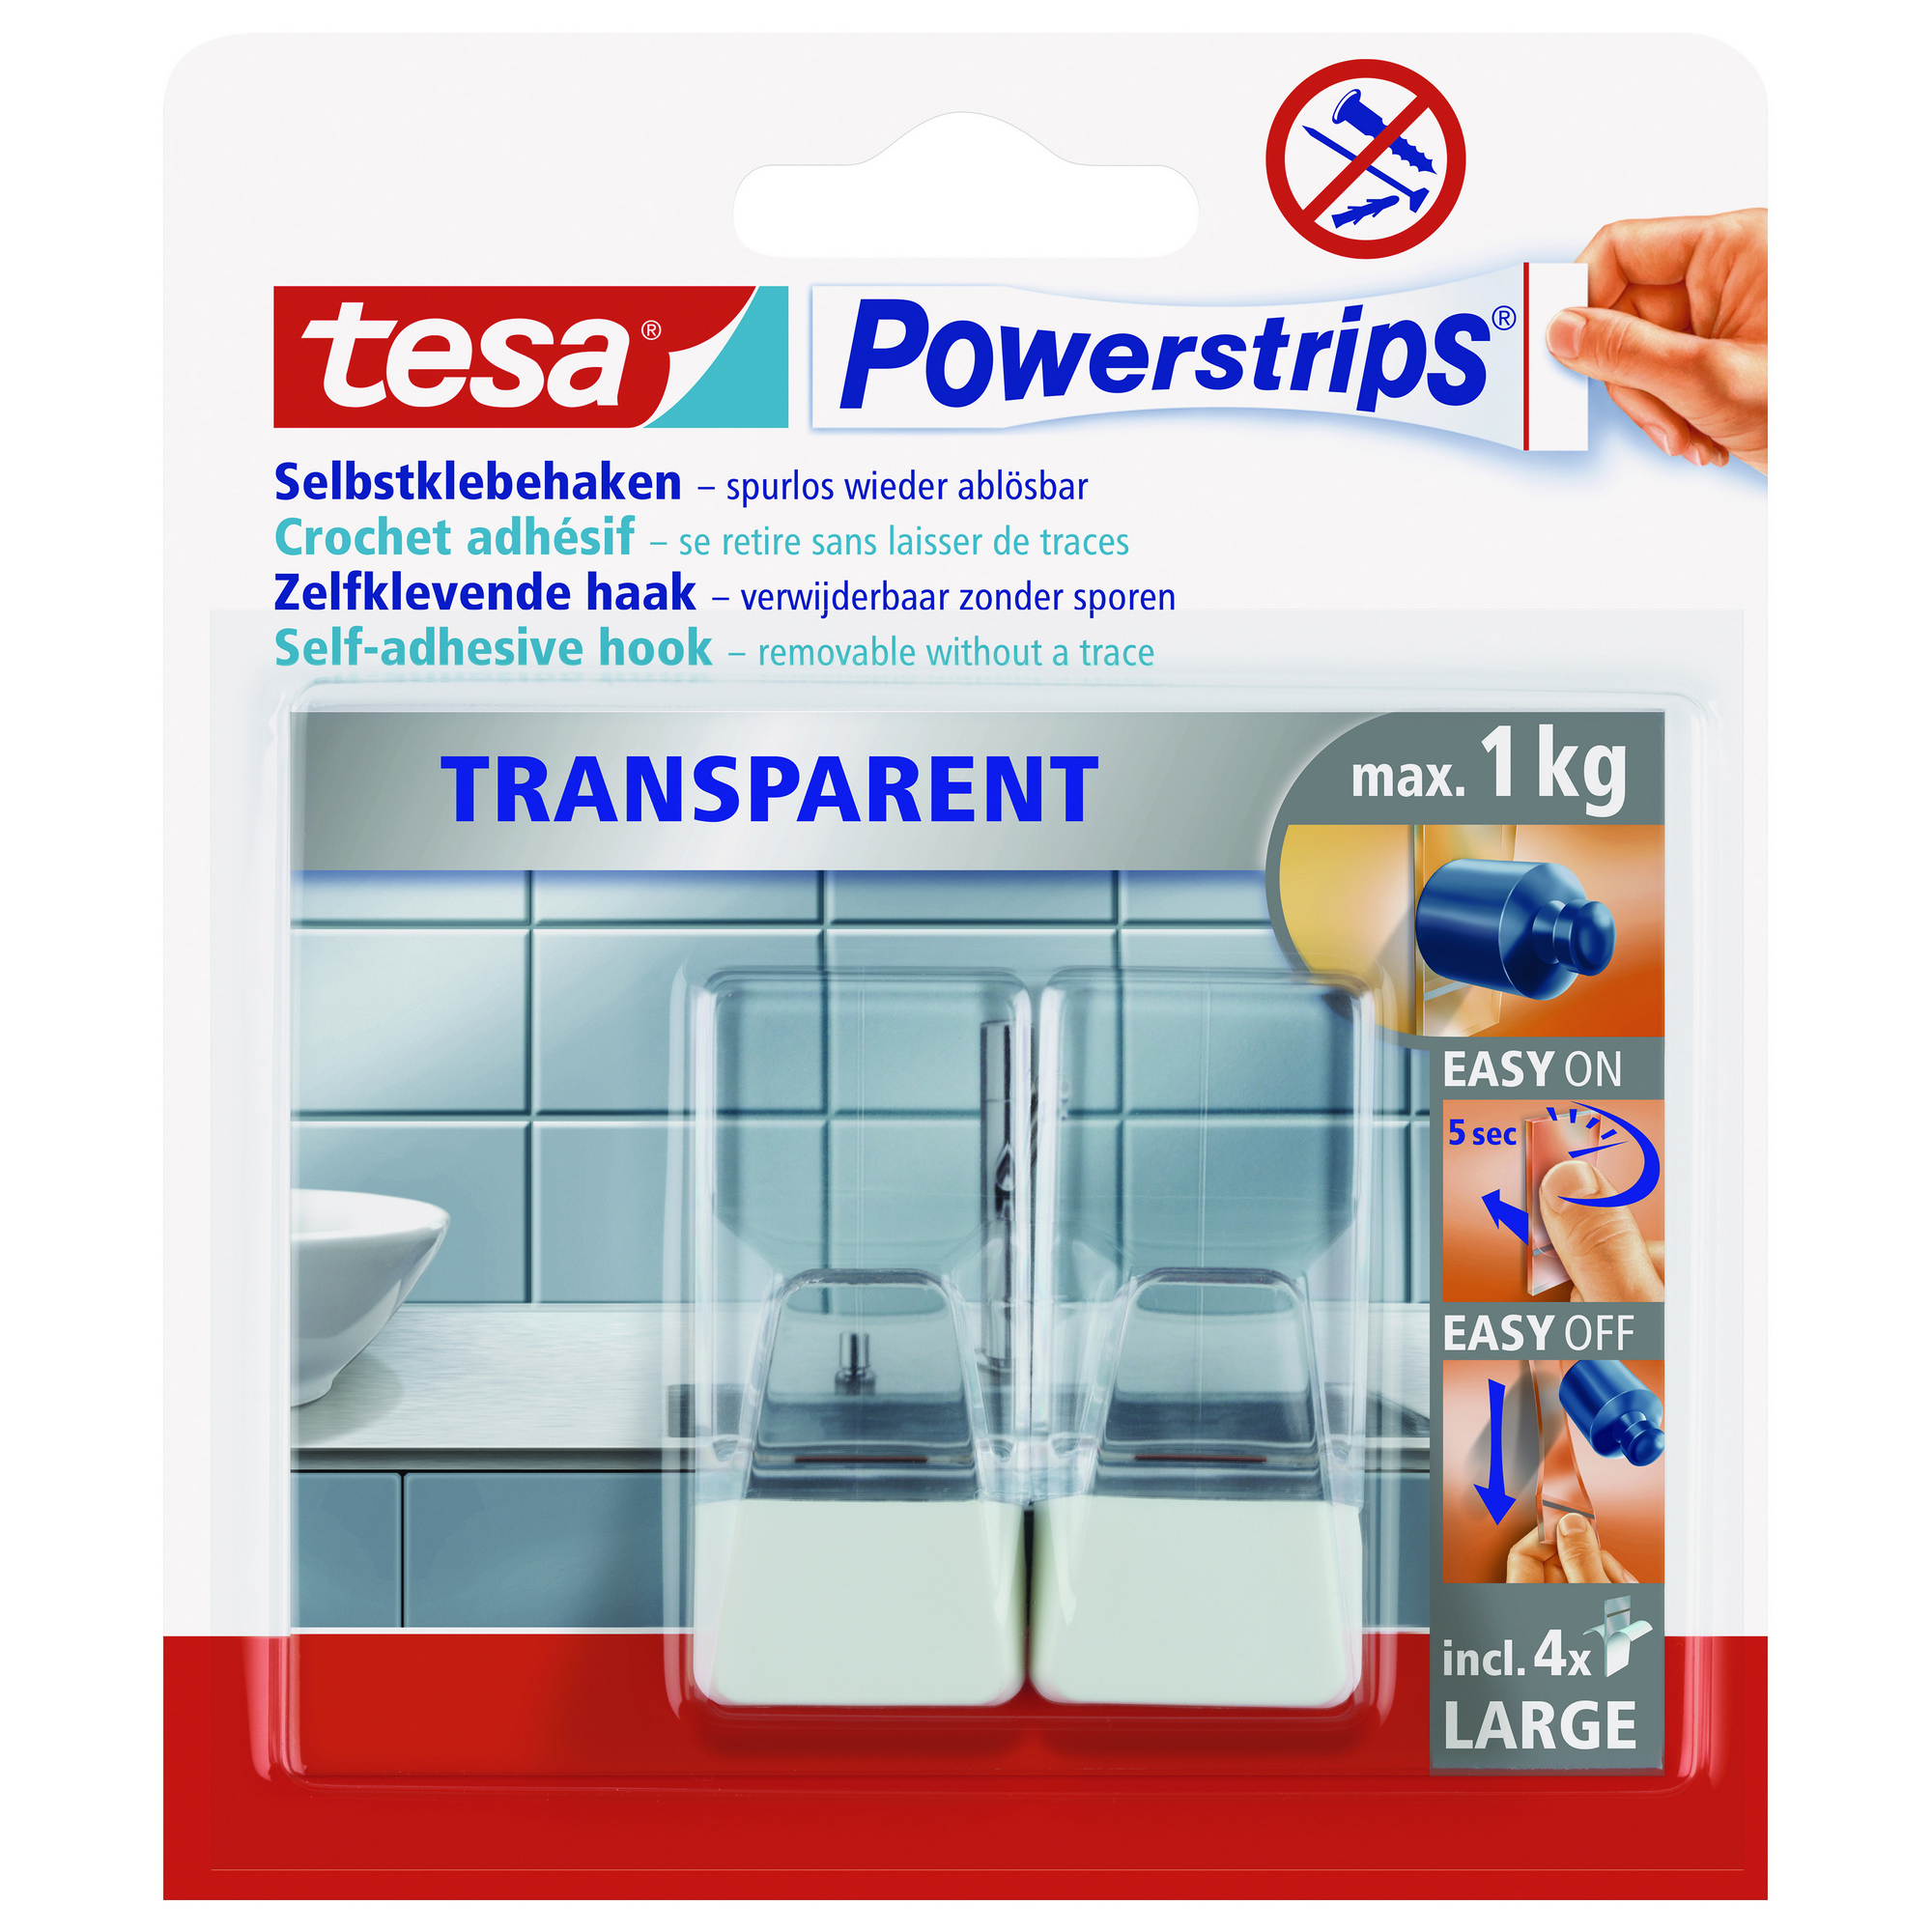 Powerstrips Haken "Transparent" weiß + product picture